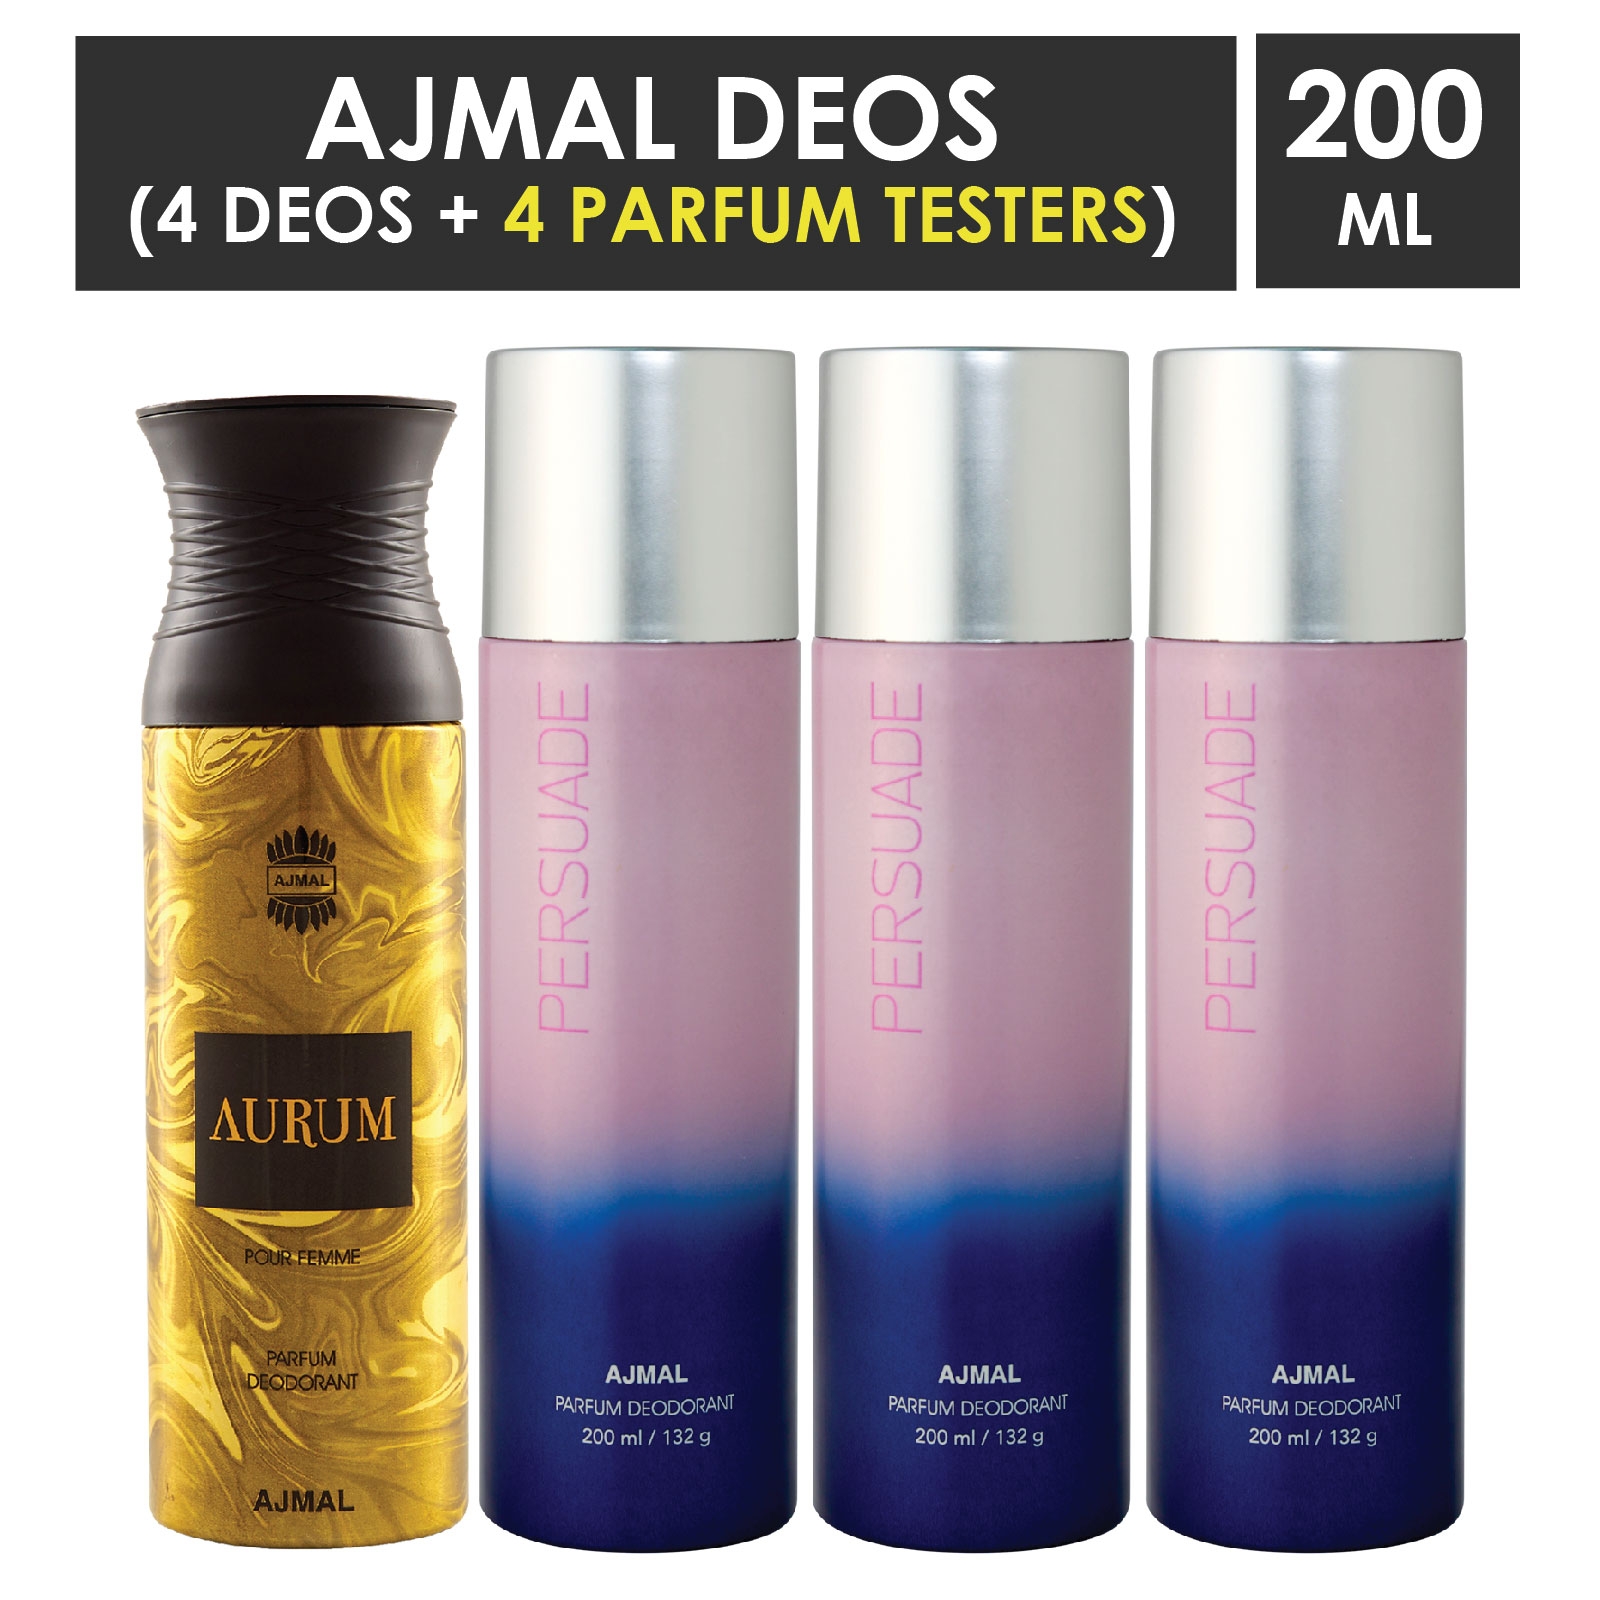 Ajmal | Ajmal 1 Aurum Femme for Women and 3 Persuade for Men & Women High Quality Deodorants each 200ML Combo pack of 4 (Total 800ML) + 4 Parfum Testers